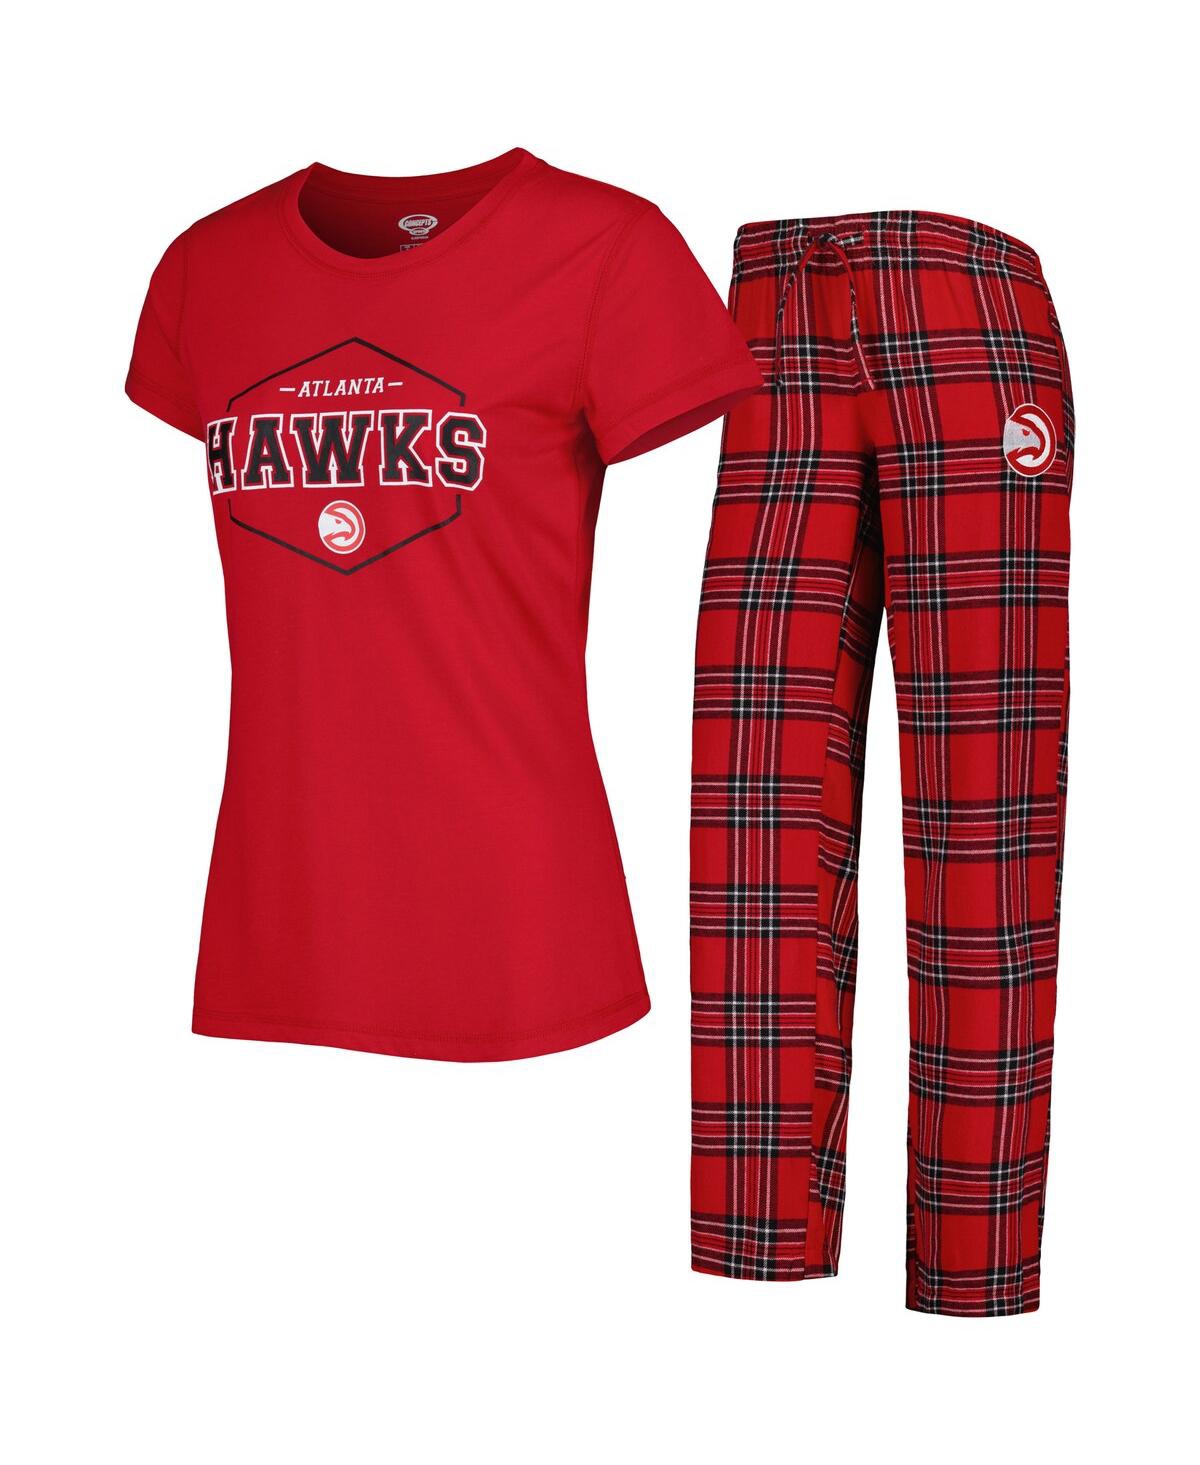 Women's Concepts Sport Red, Black Atlanta Hawks Badge T-shirt and Pajama Pants Sleep Set - Red, Black